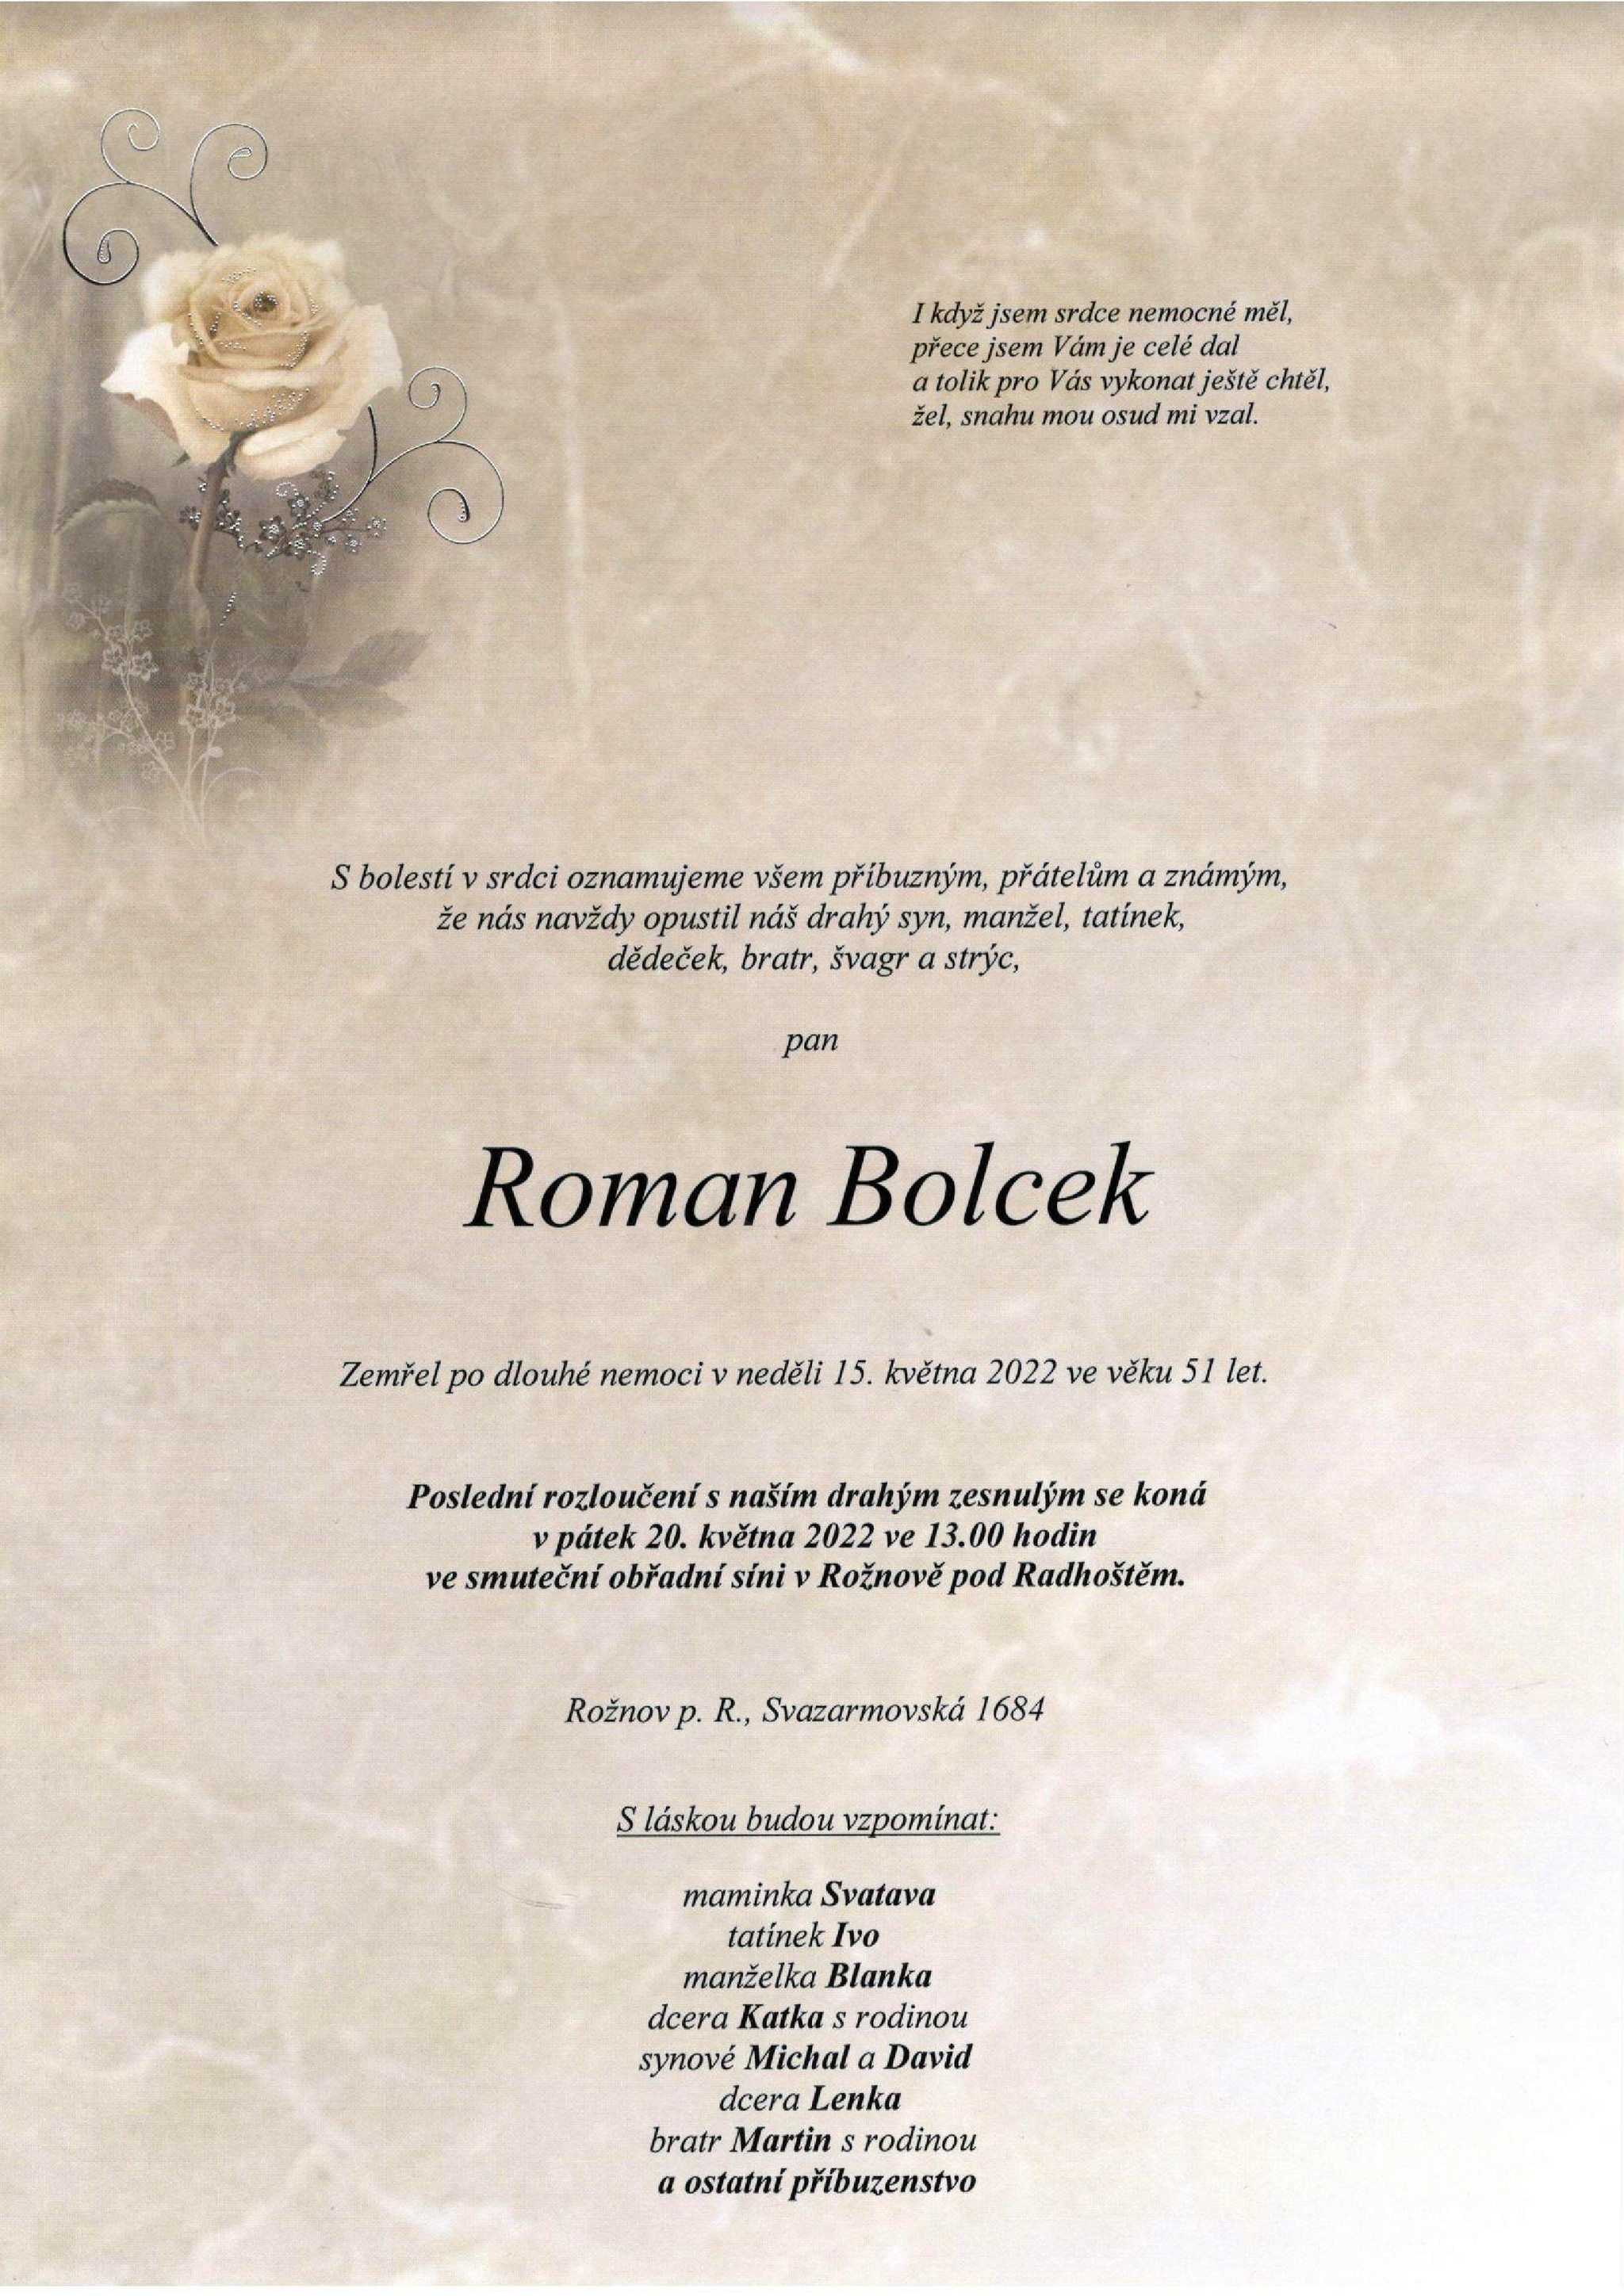 Roman Bolcek